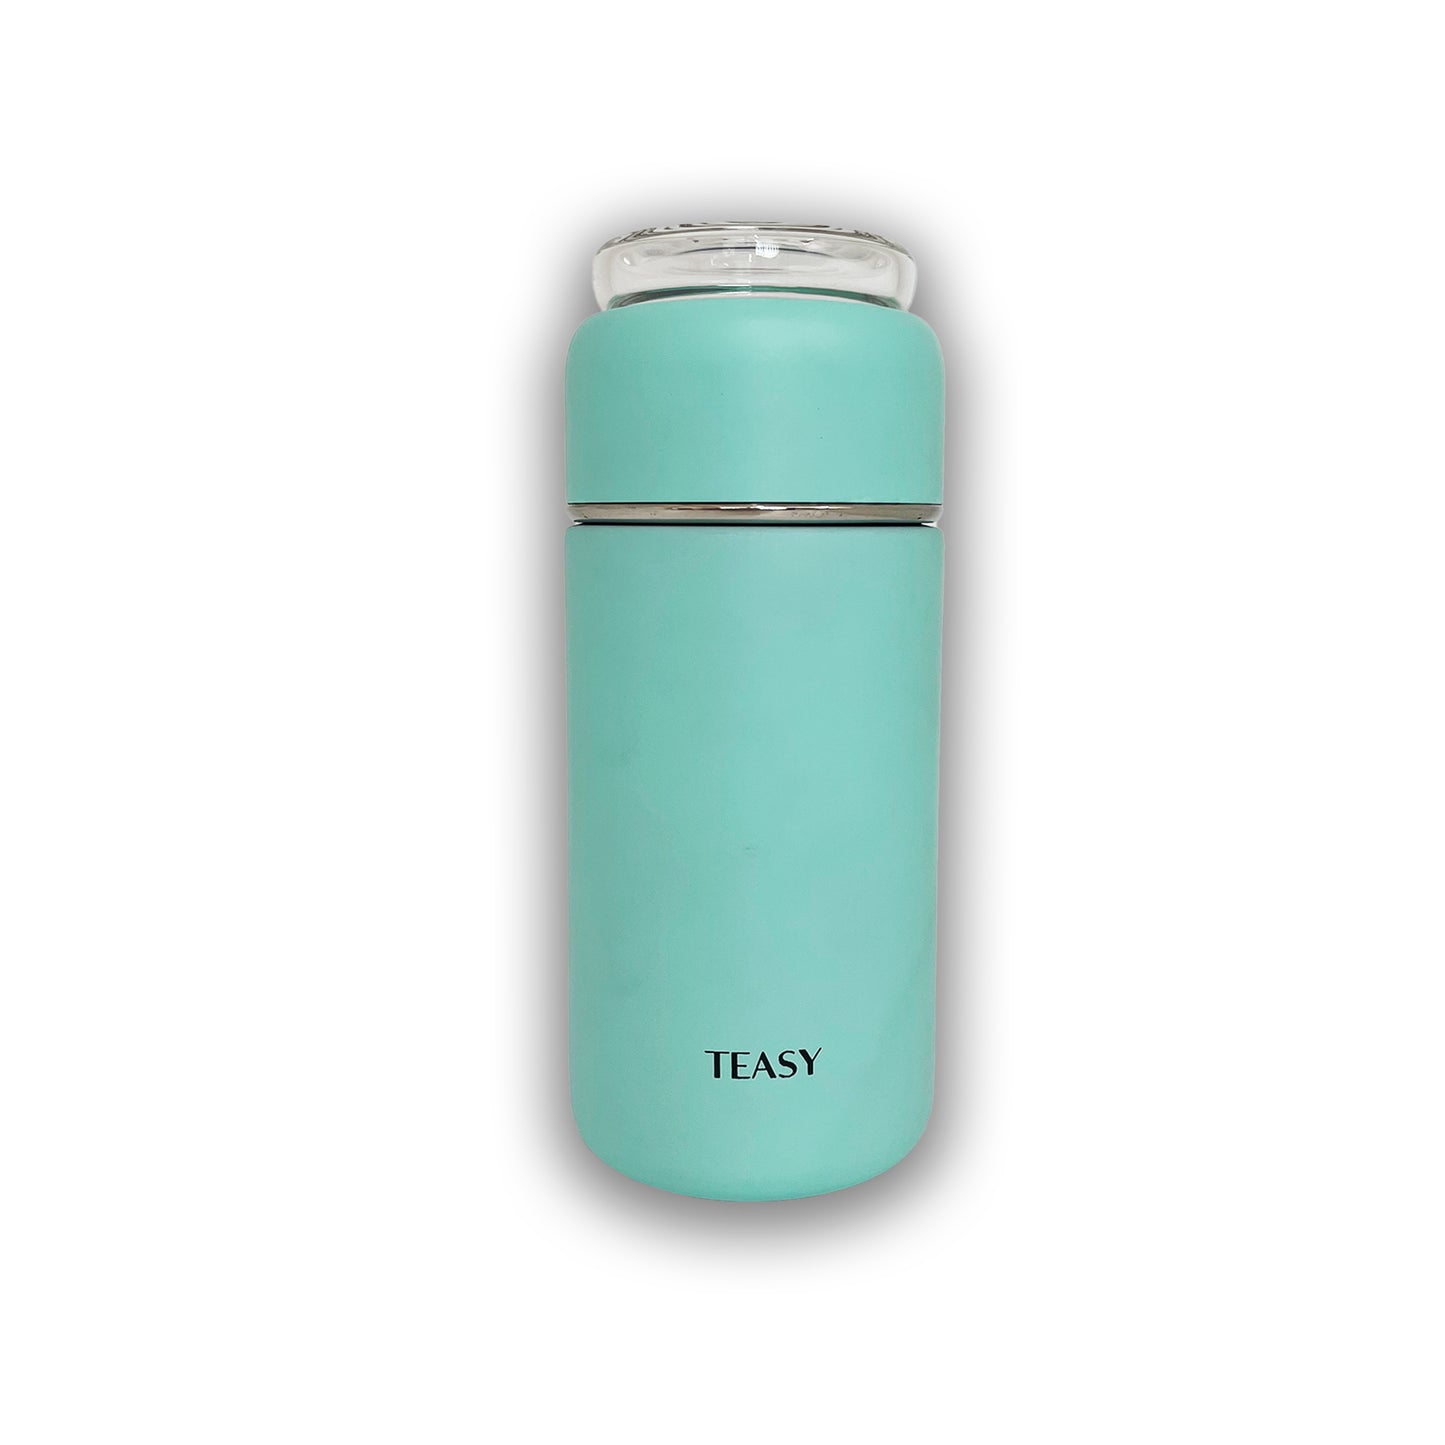 Reverse image of Teasy flask in teal.